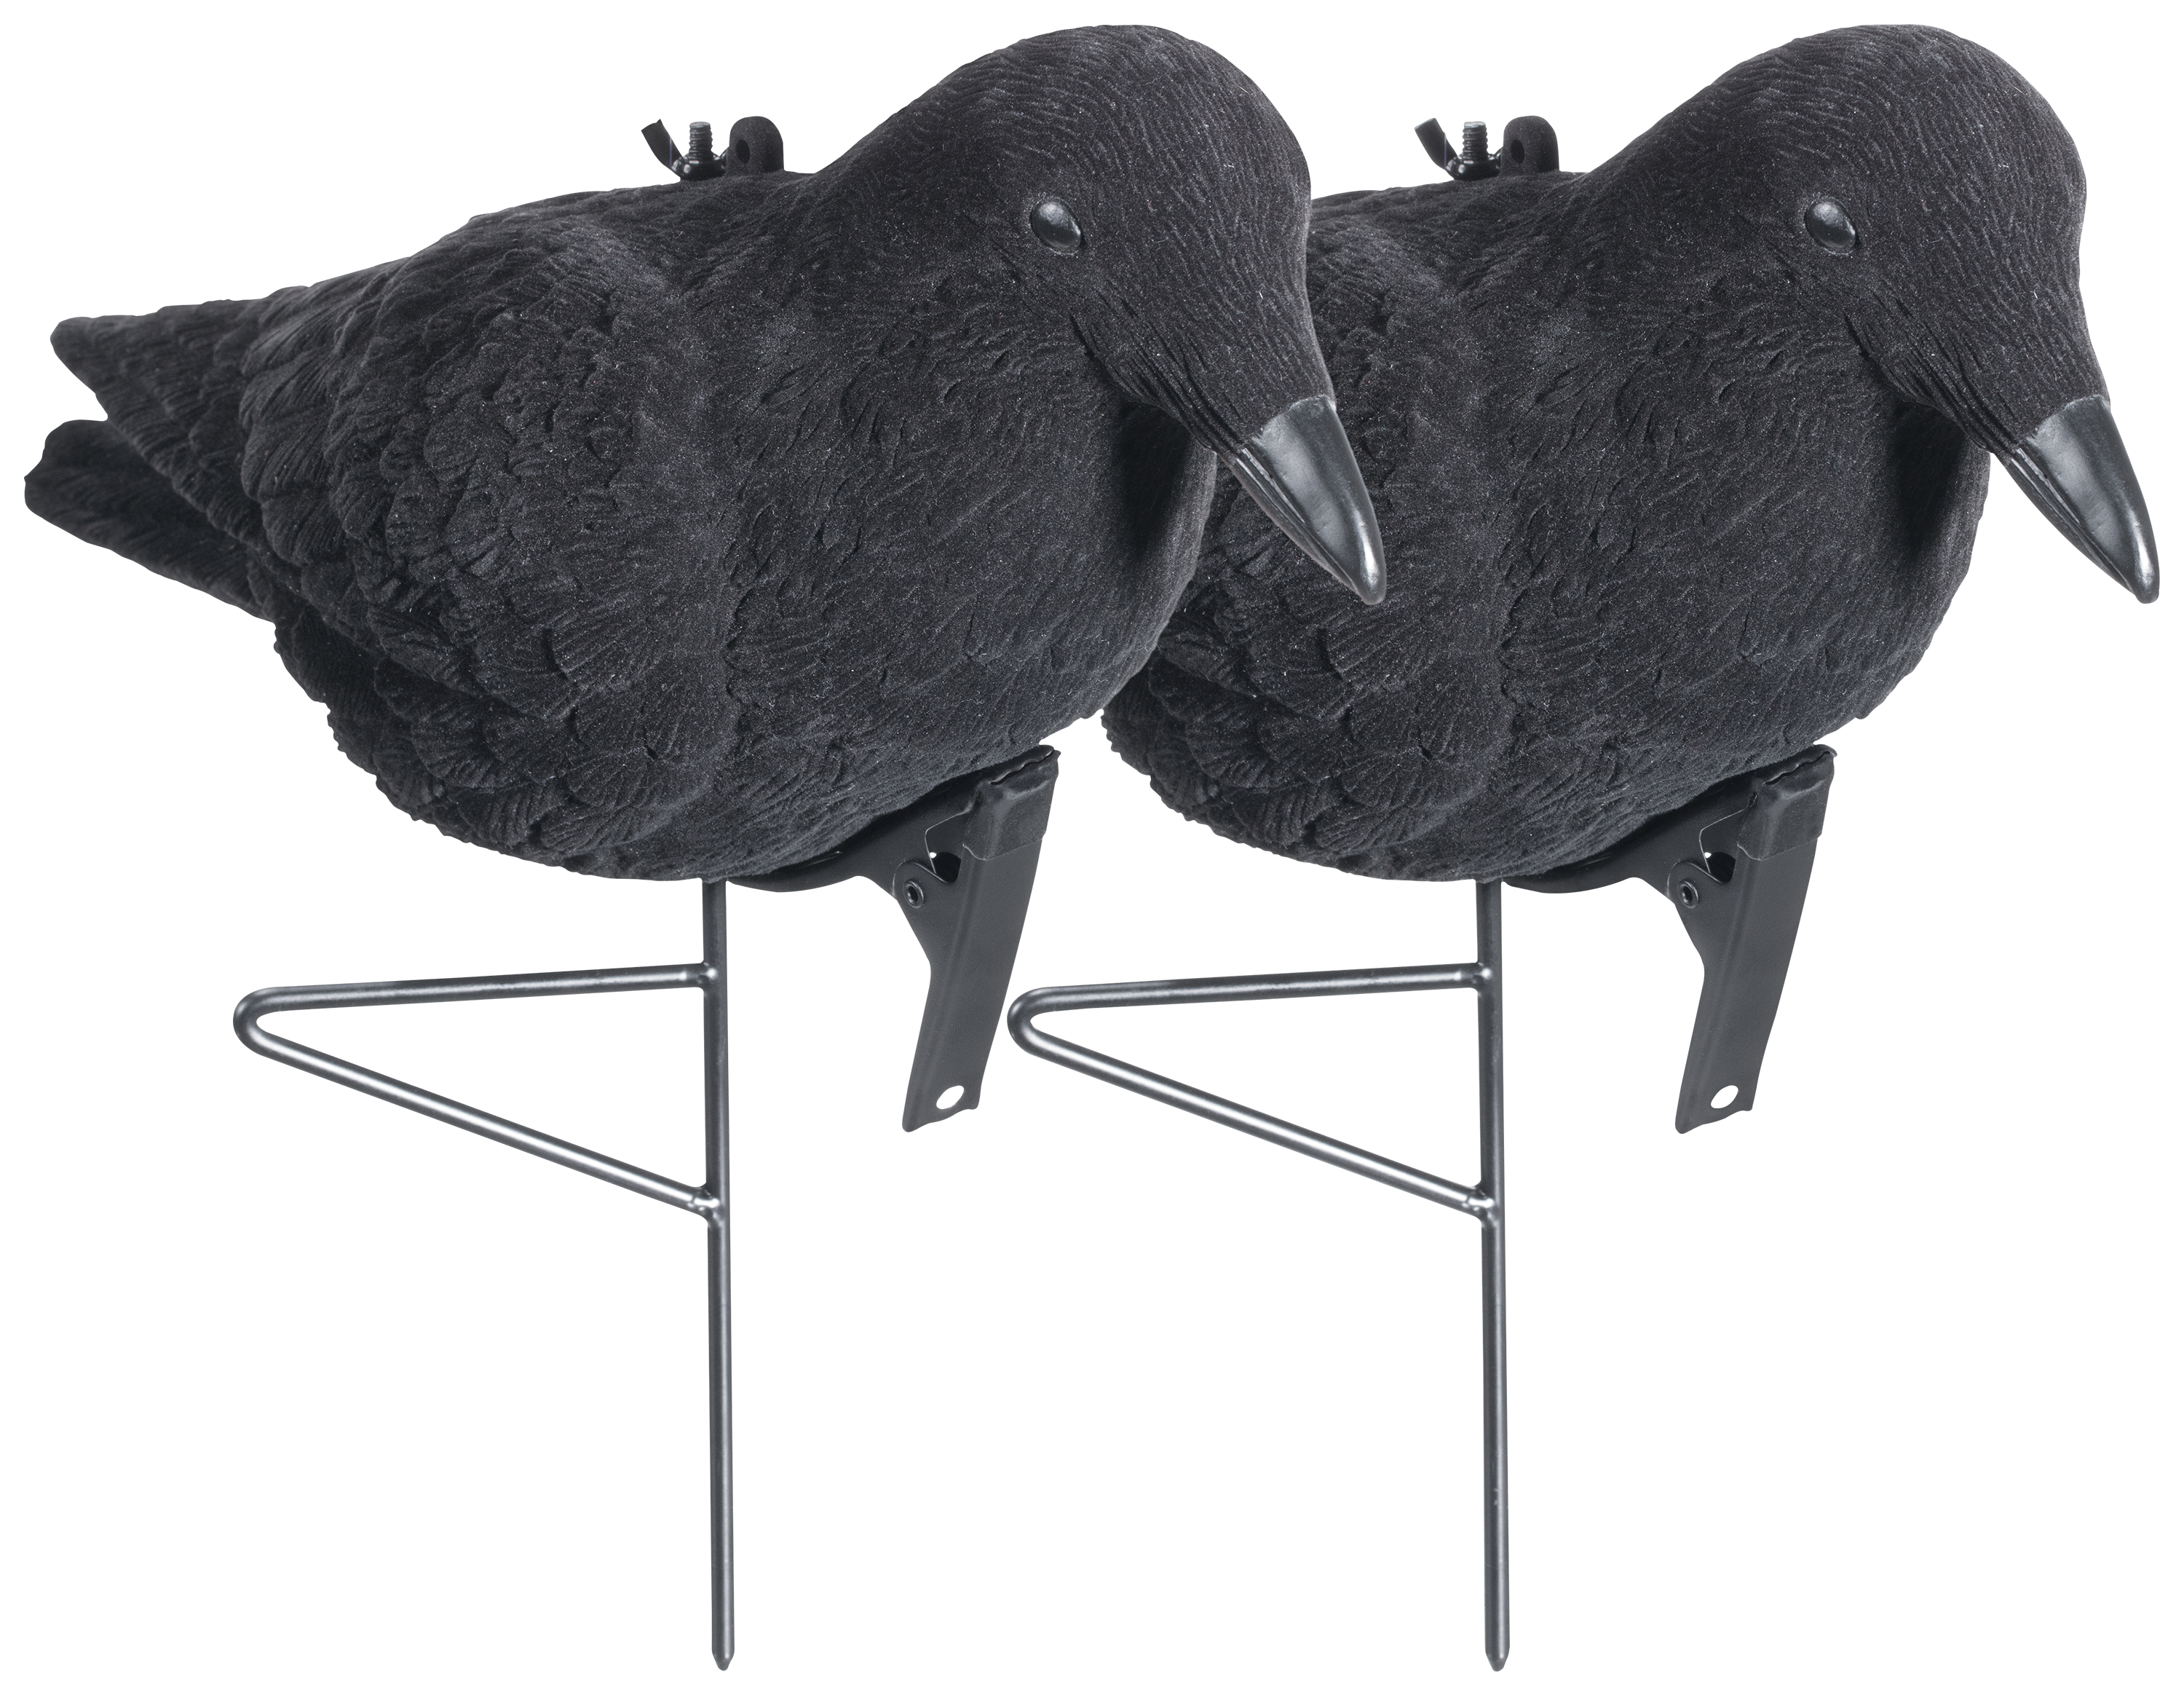 Cabela's Flocked Crow Decoy - 2 Crows